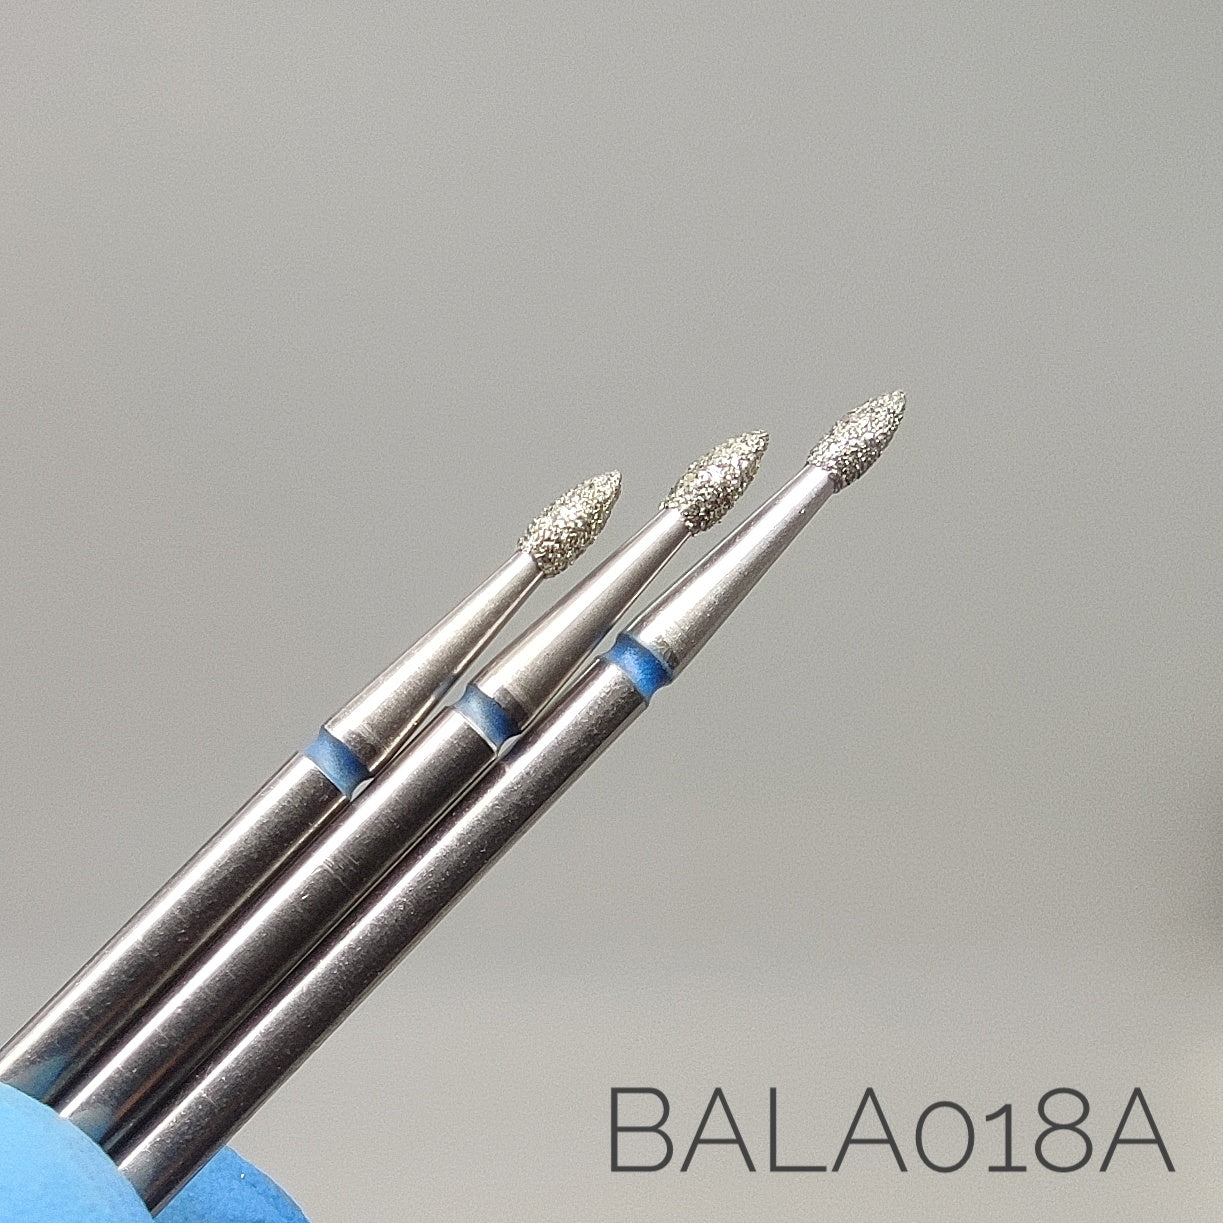 Fresa de diamante Bala sin punta. Azul, 1.8mm. Bala018